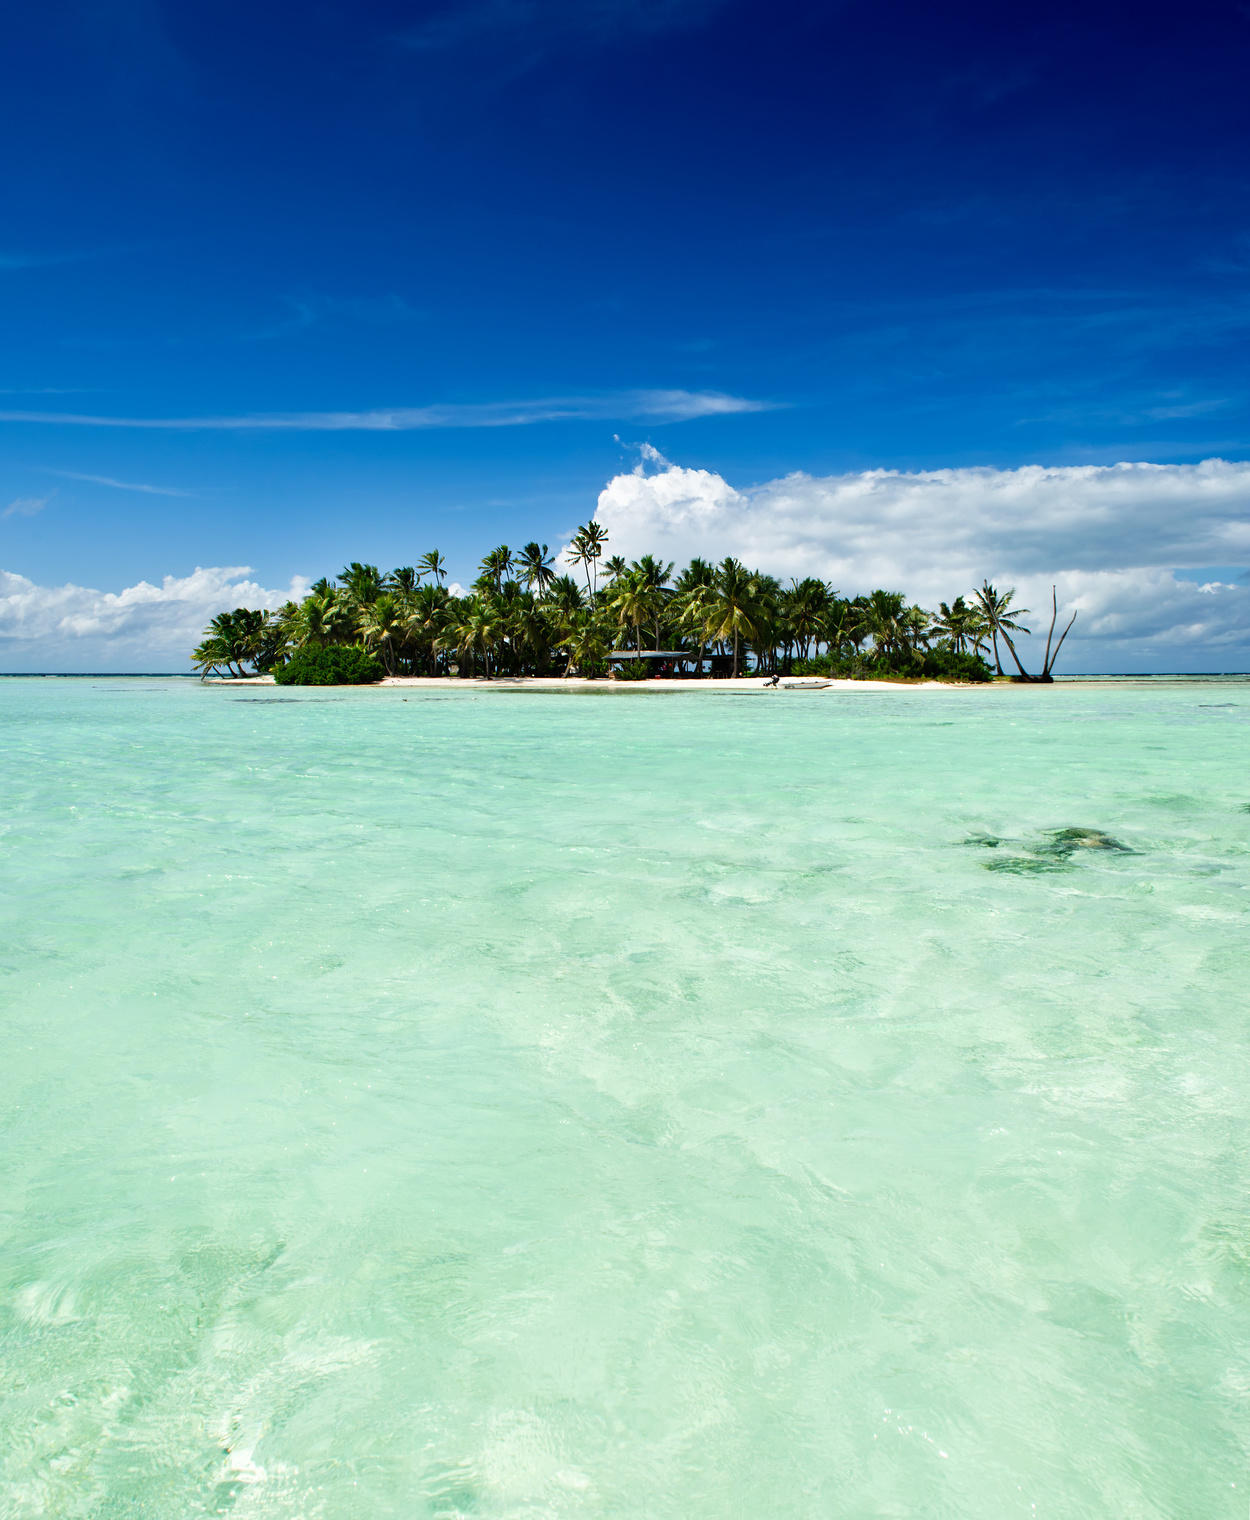 Tropical uninhabited island in the Pacific Ocean